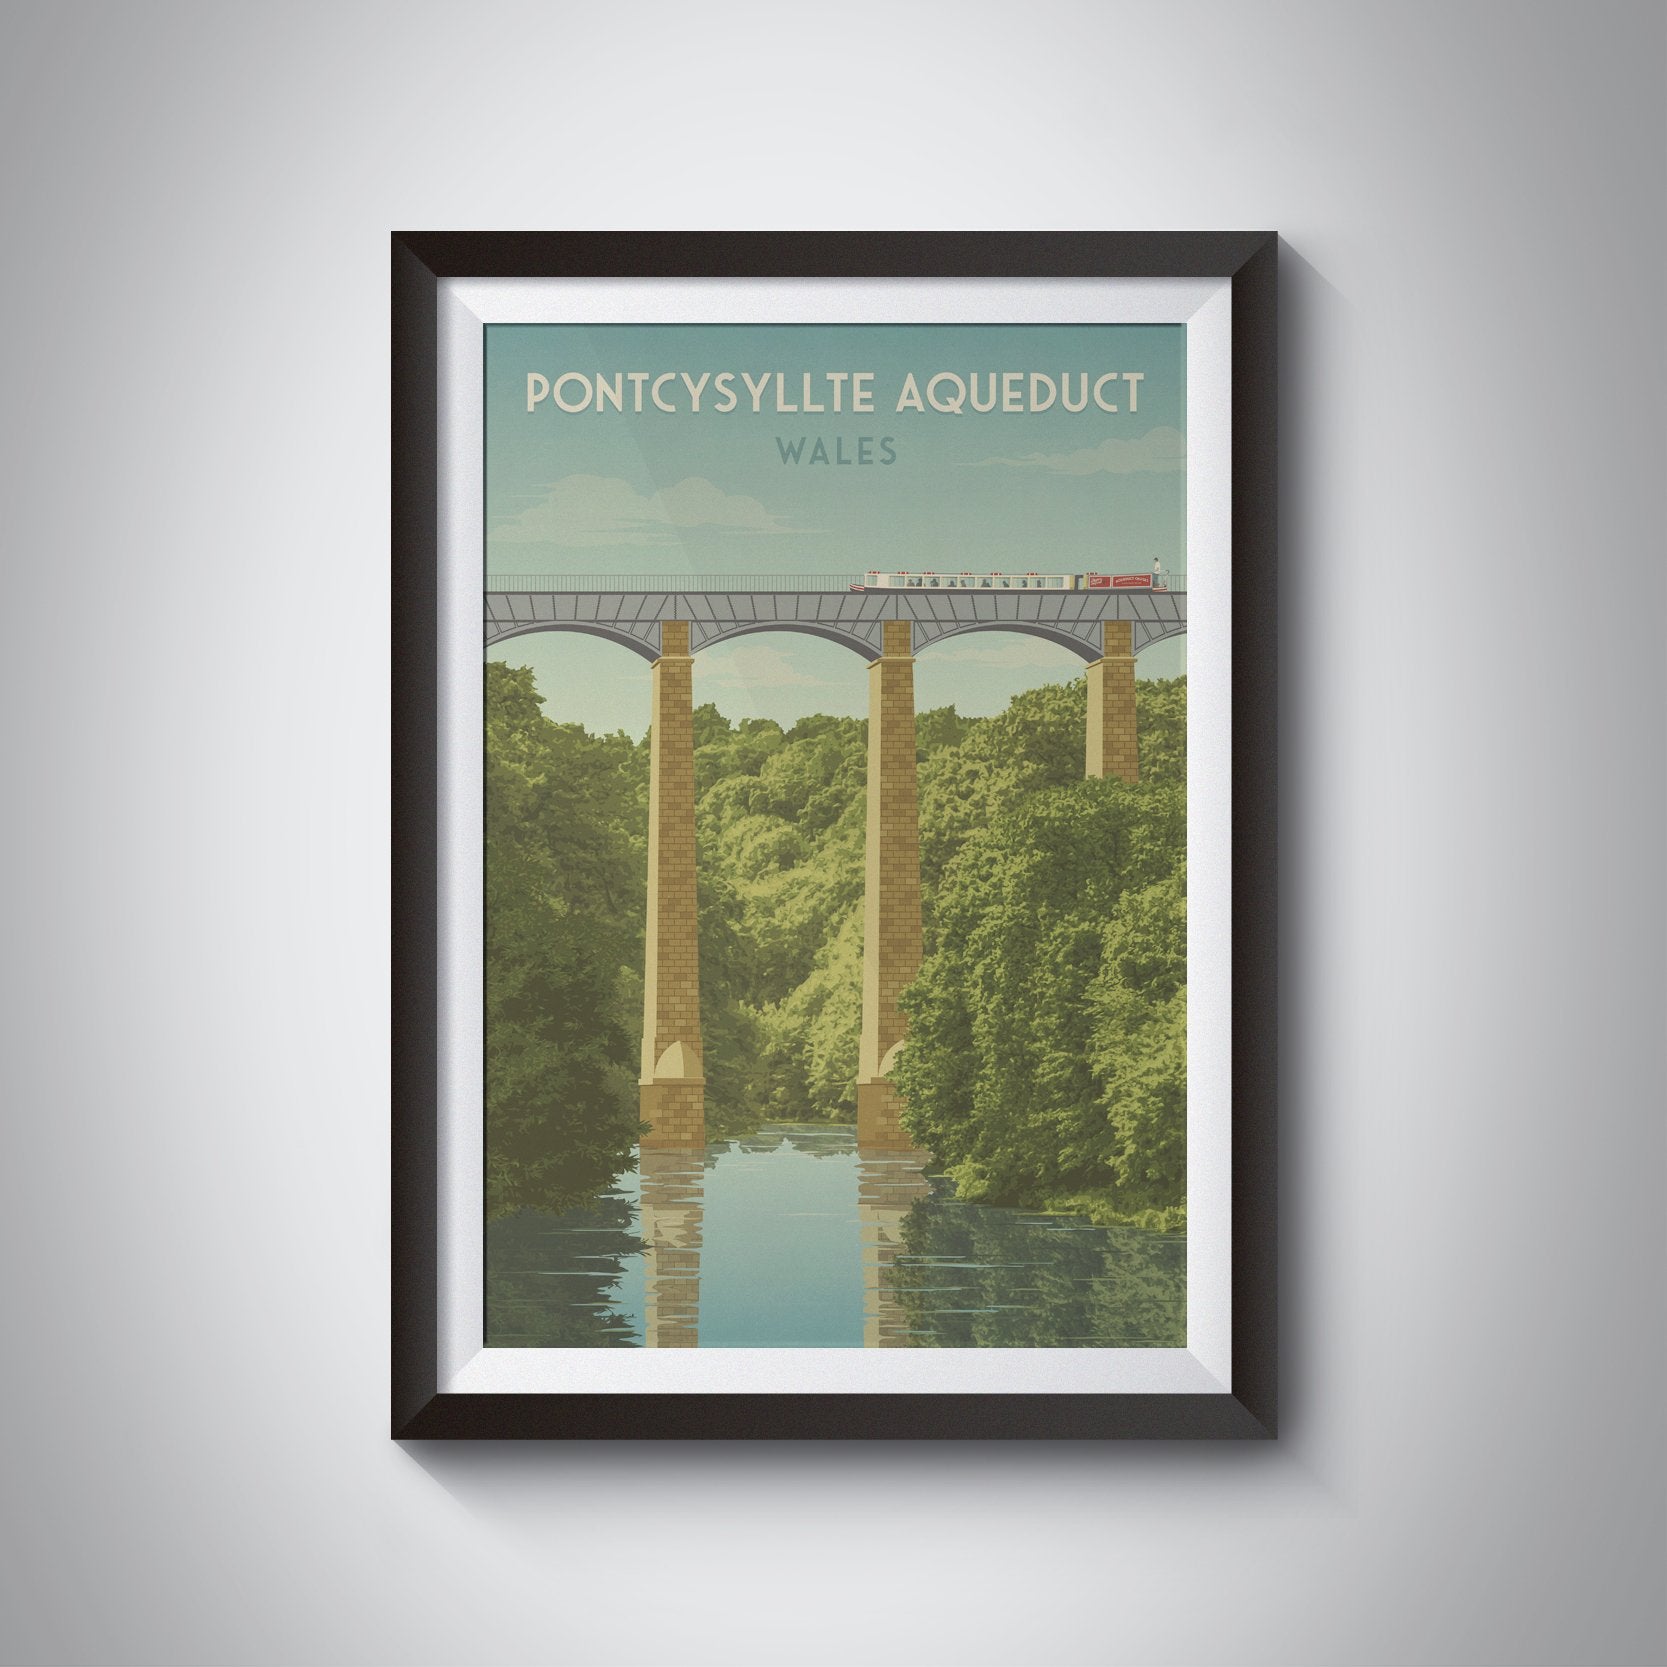 Pontcysyllte Aqueduct Wales Travel Poster